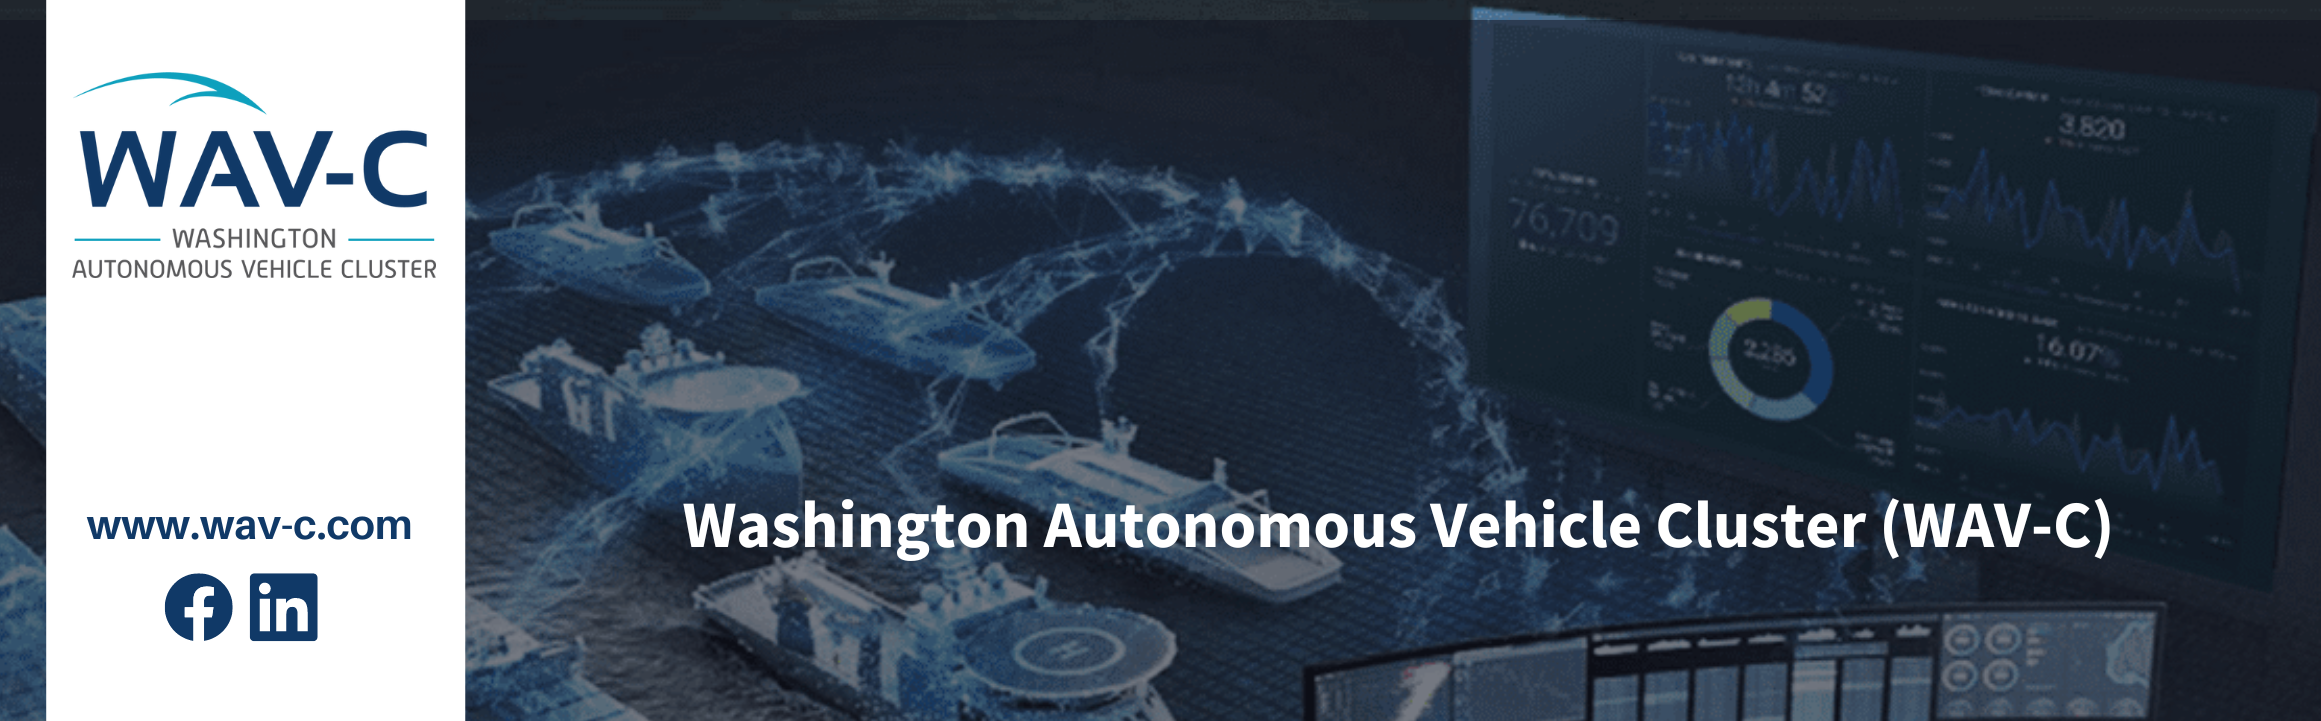 image showing autonomous technology in ships